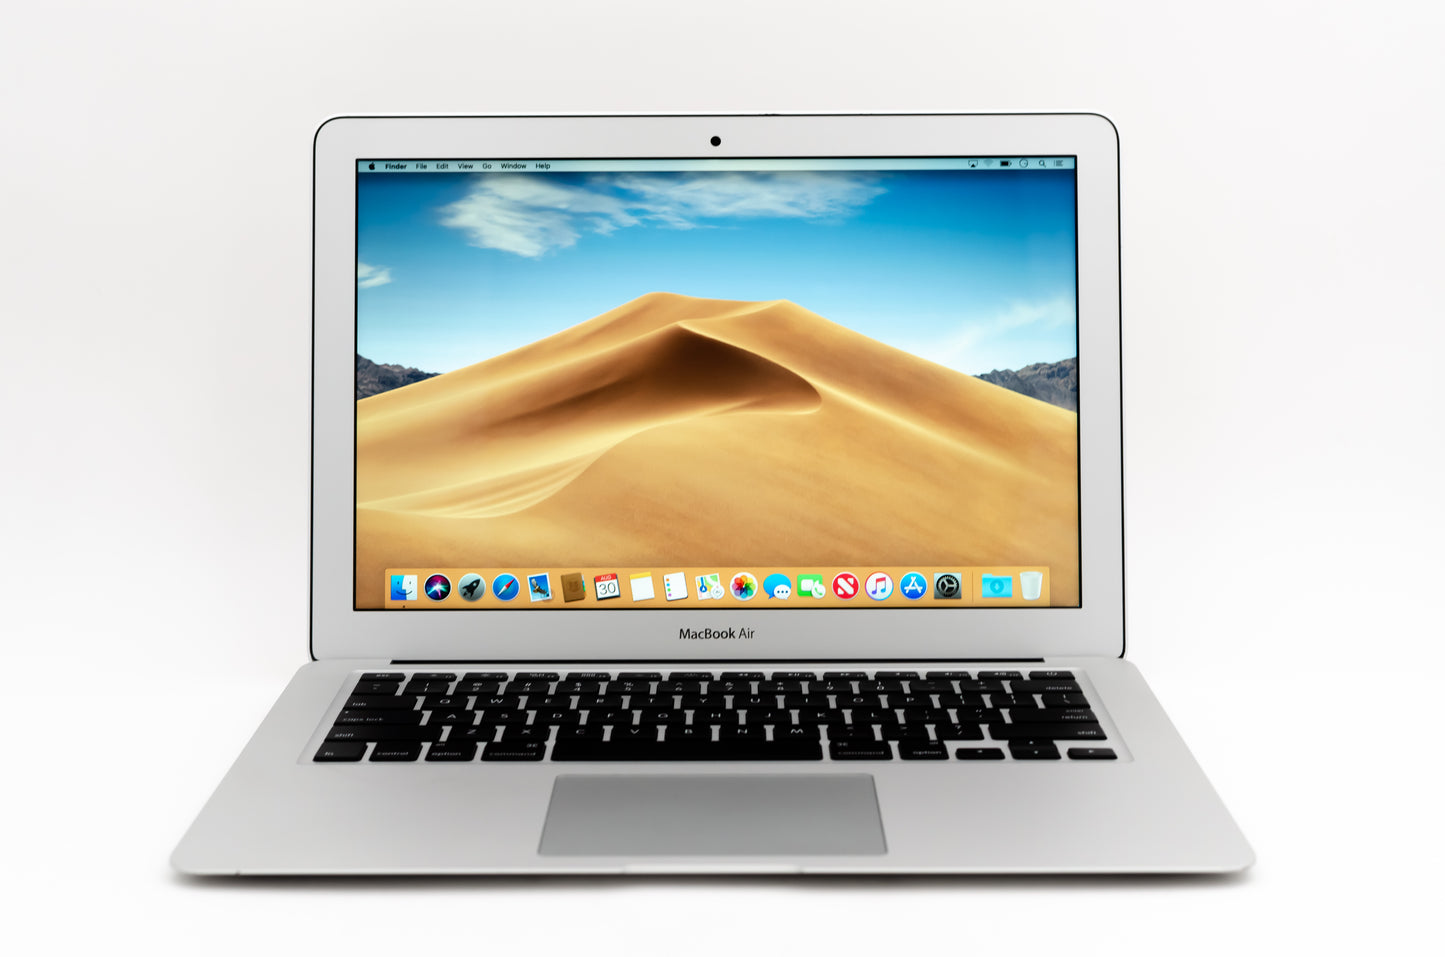 apple-mid-2011-13.3-inch-macbook-air-a1369-aluminum-dci7 - 1.8ghz processor, 4gb ram, hd 3000 - 348mb gpu-mc965ll/a-1